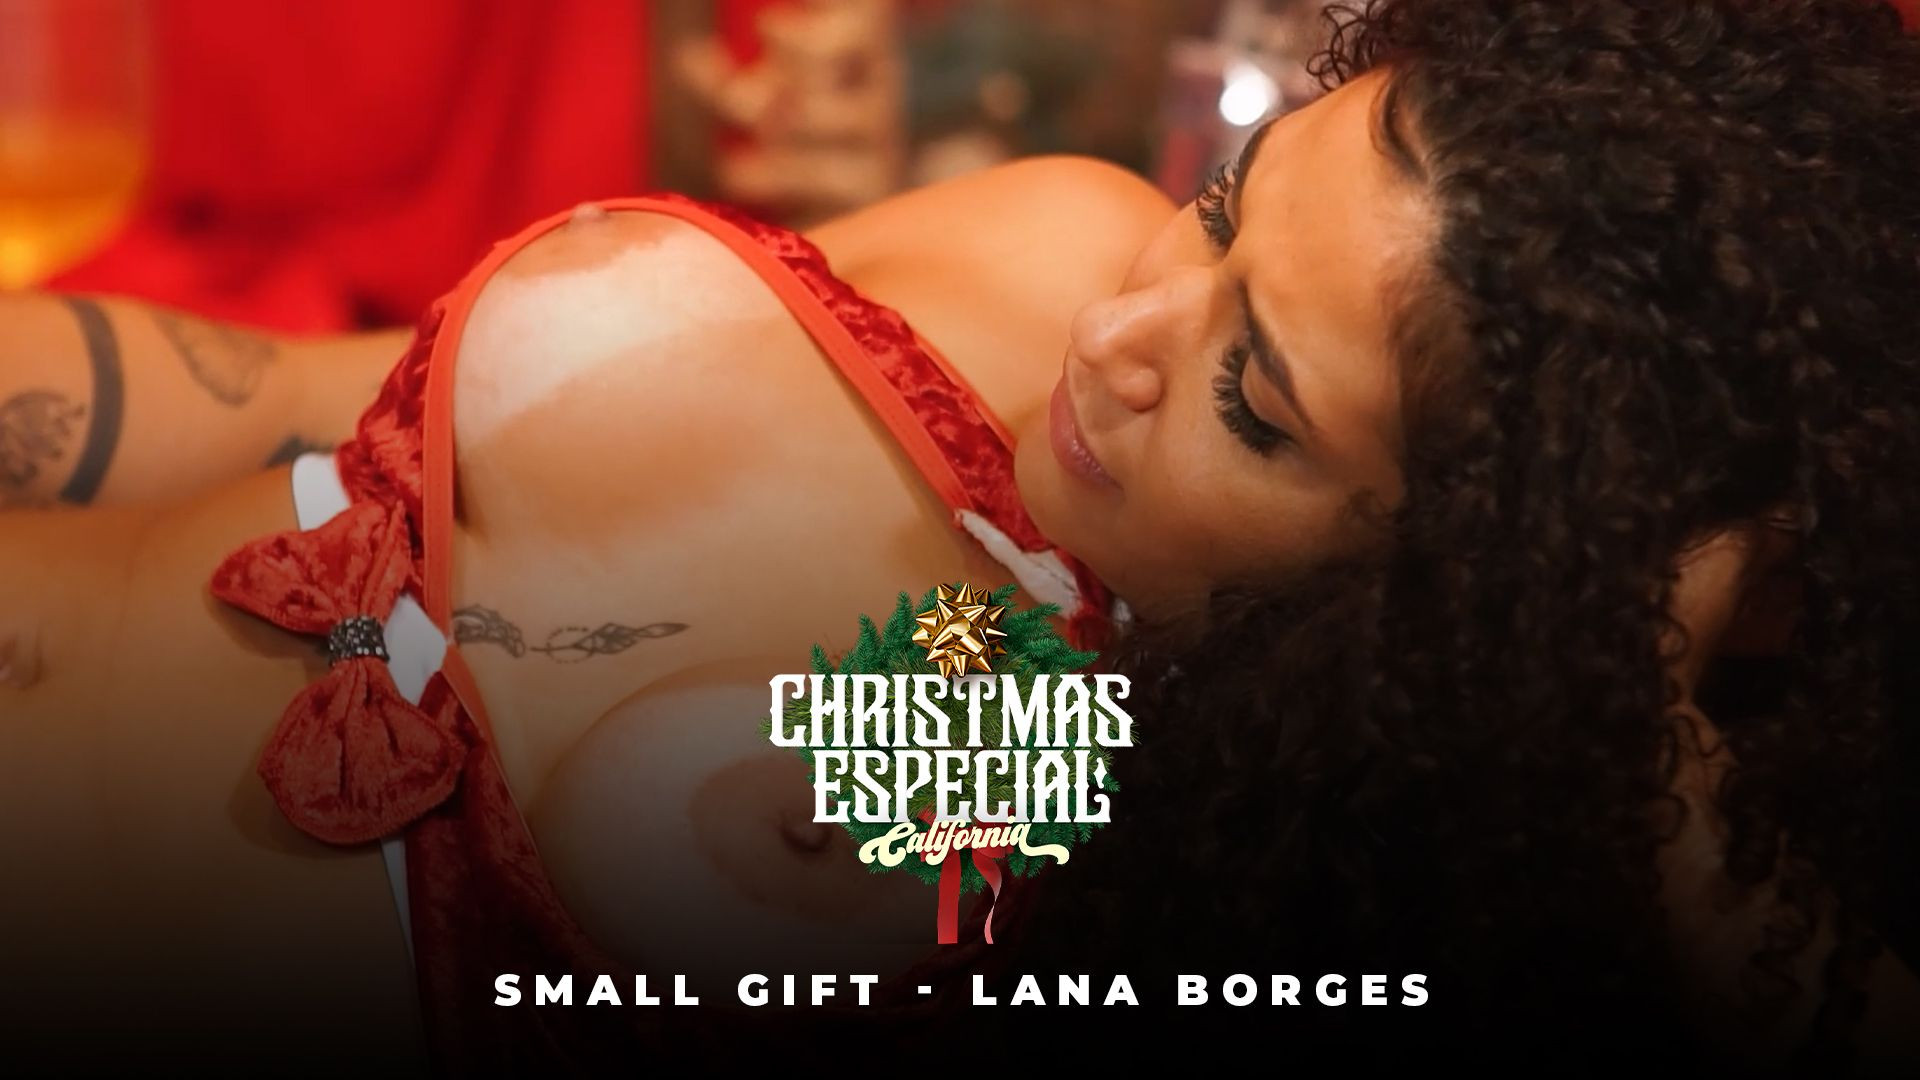 Christmas gift - Lana Borges